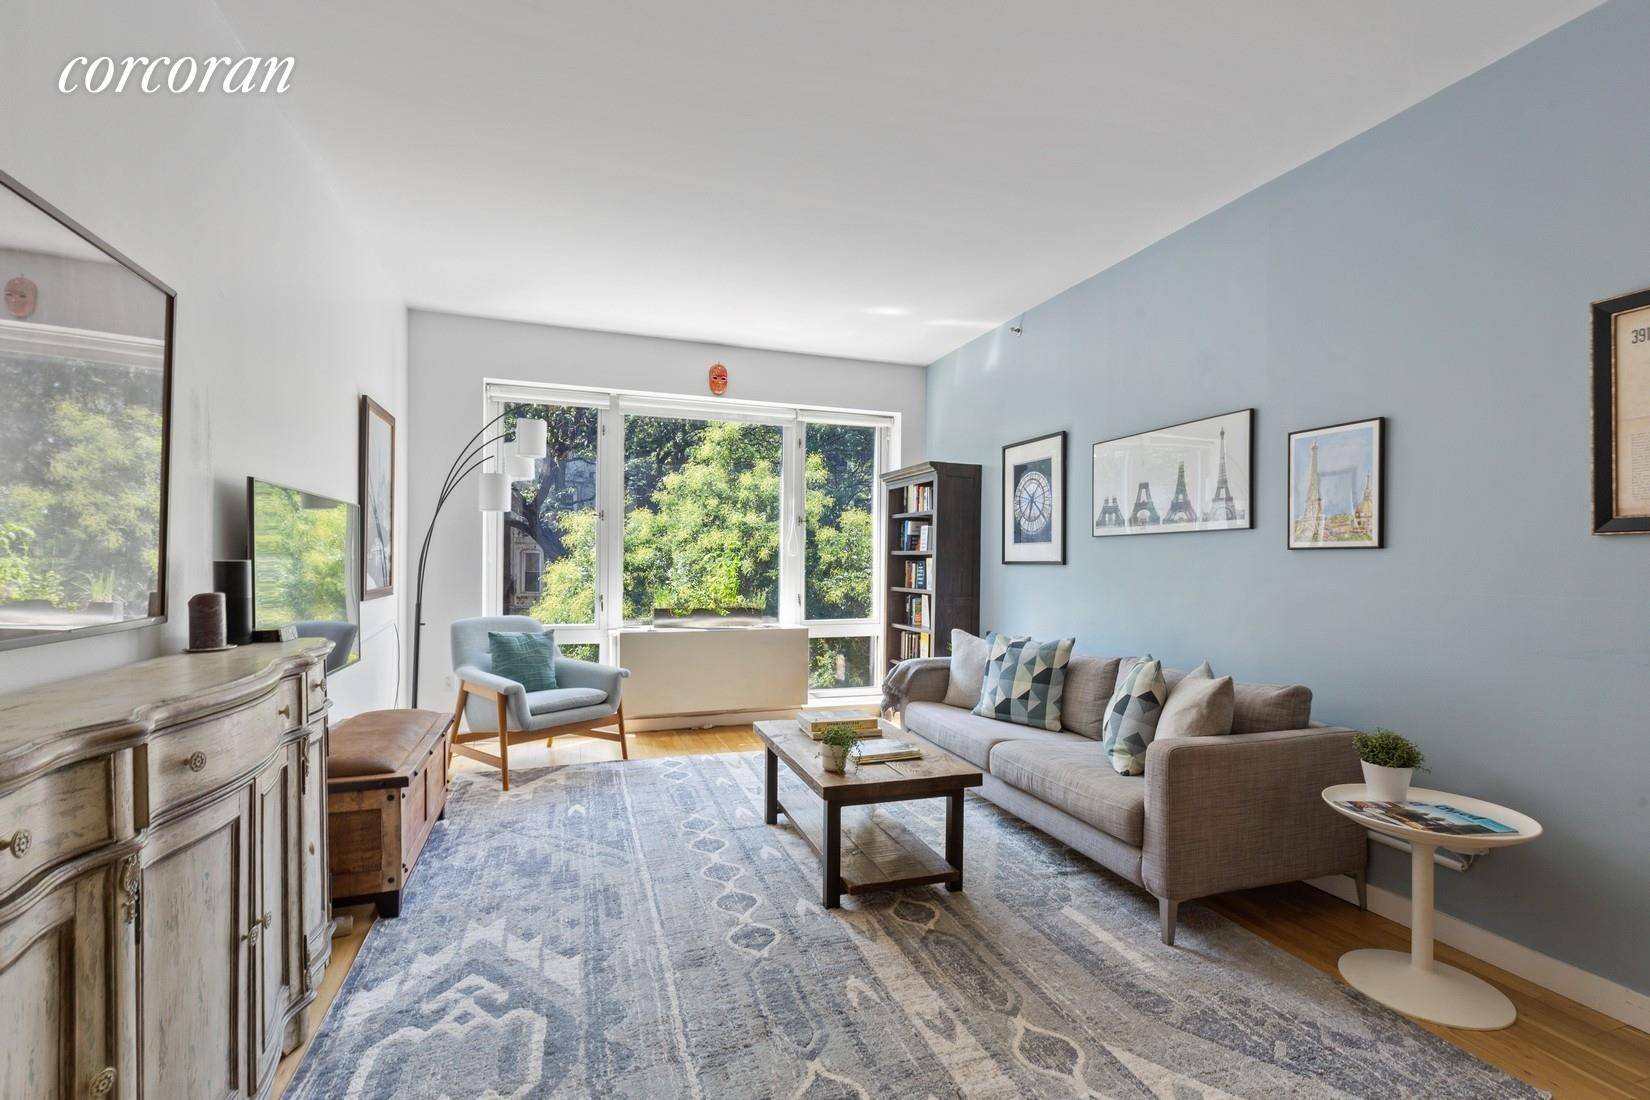 Modern, luxurious convenience in historic Clinton Hill awaits at 545 Washington Avenue, the Isabella Condominium.